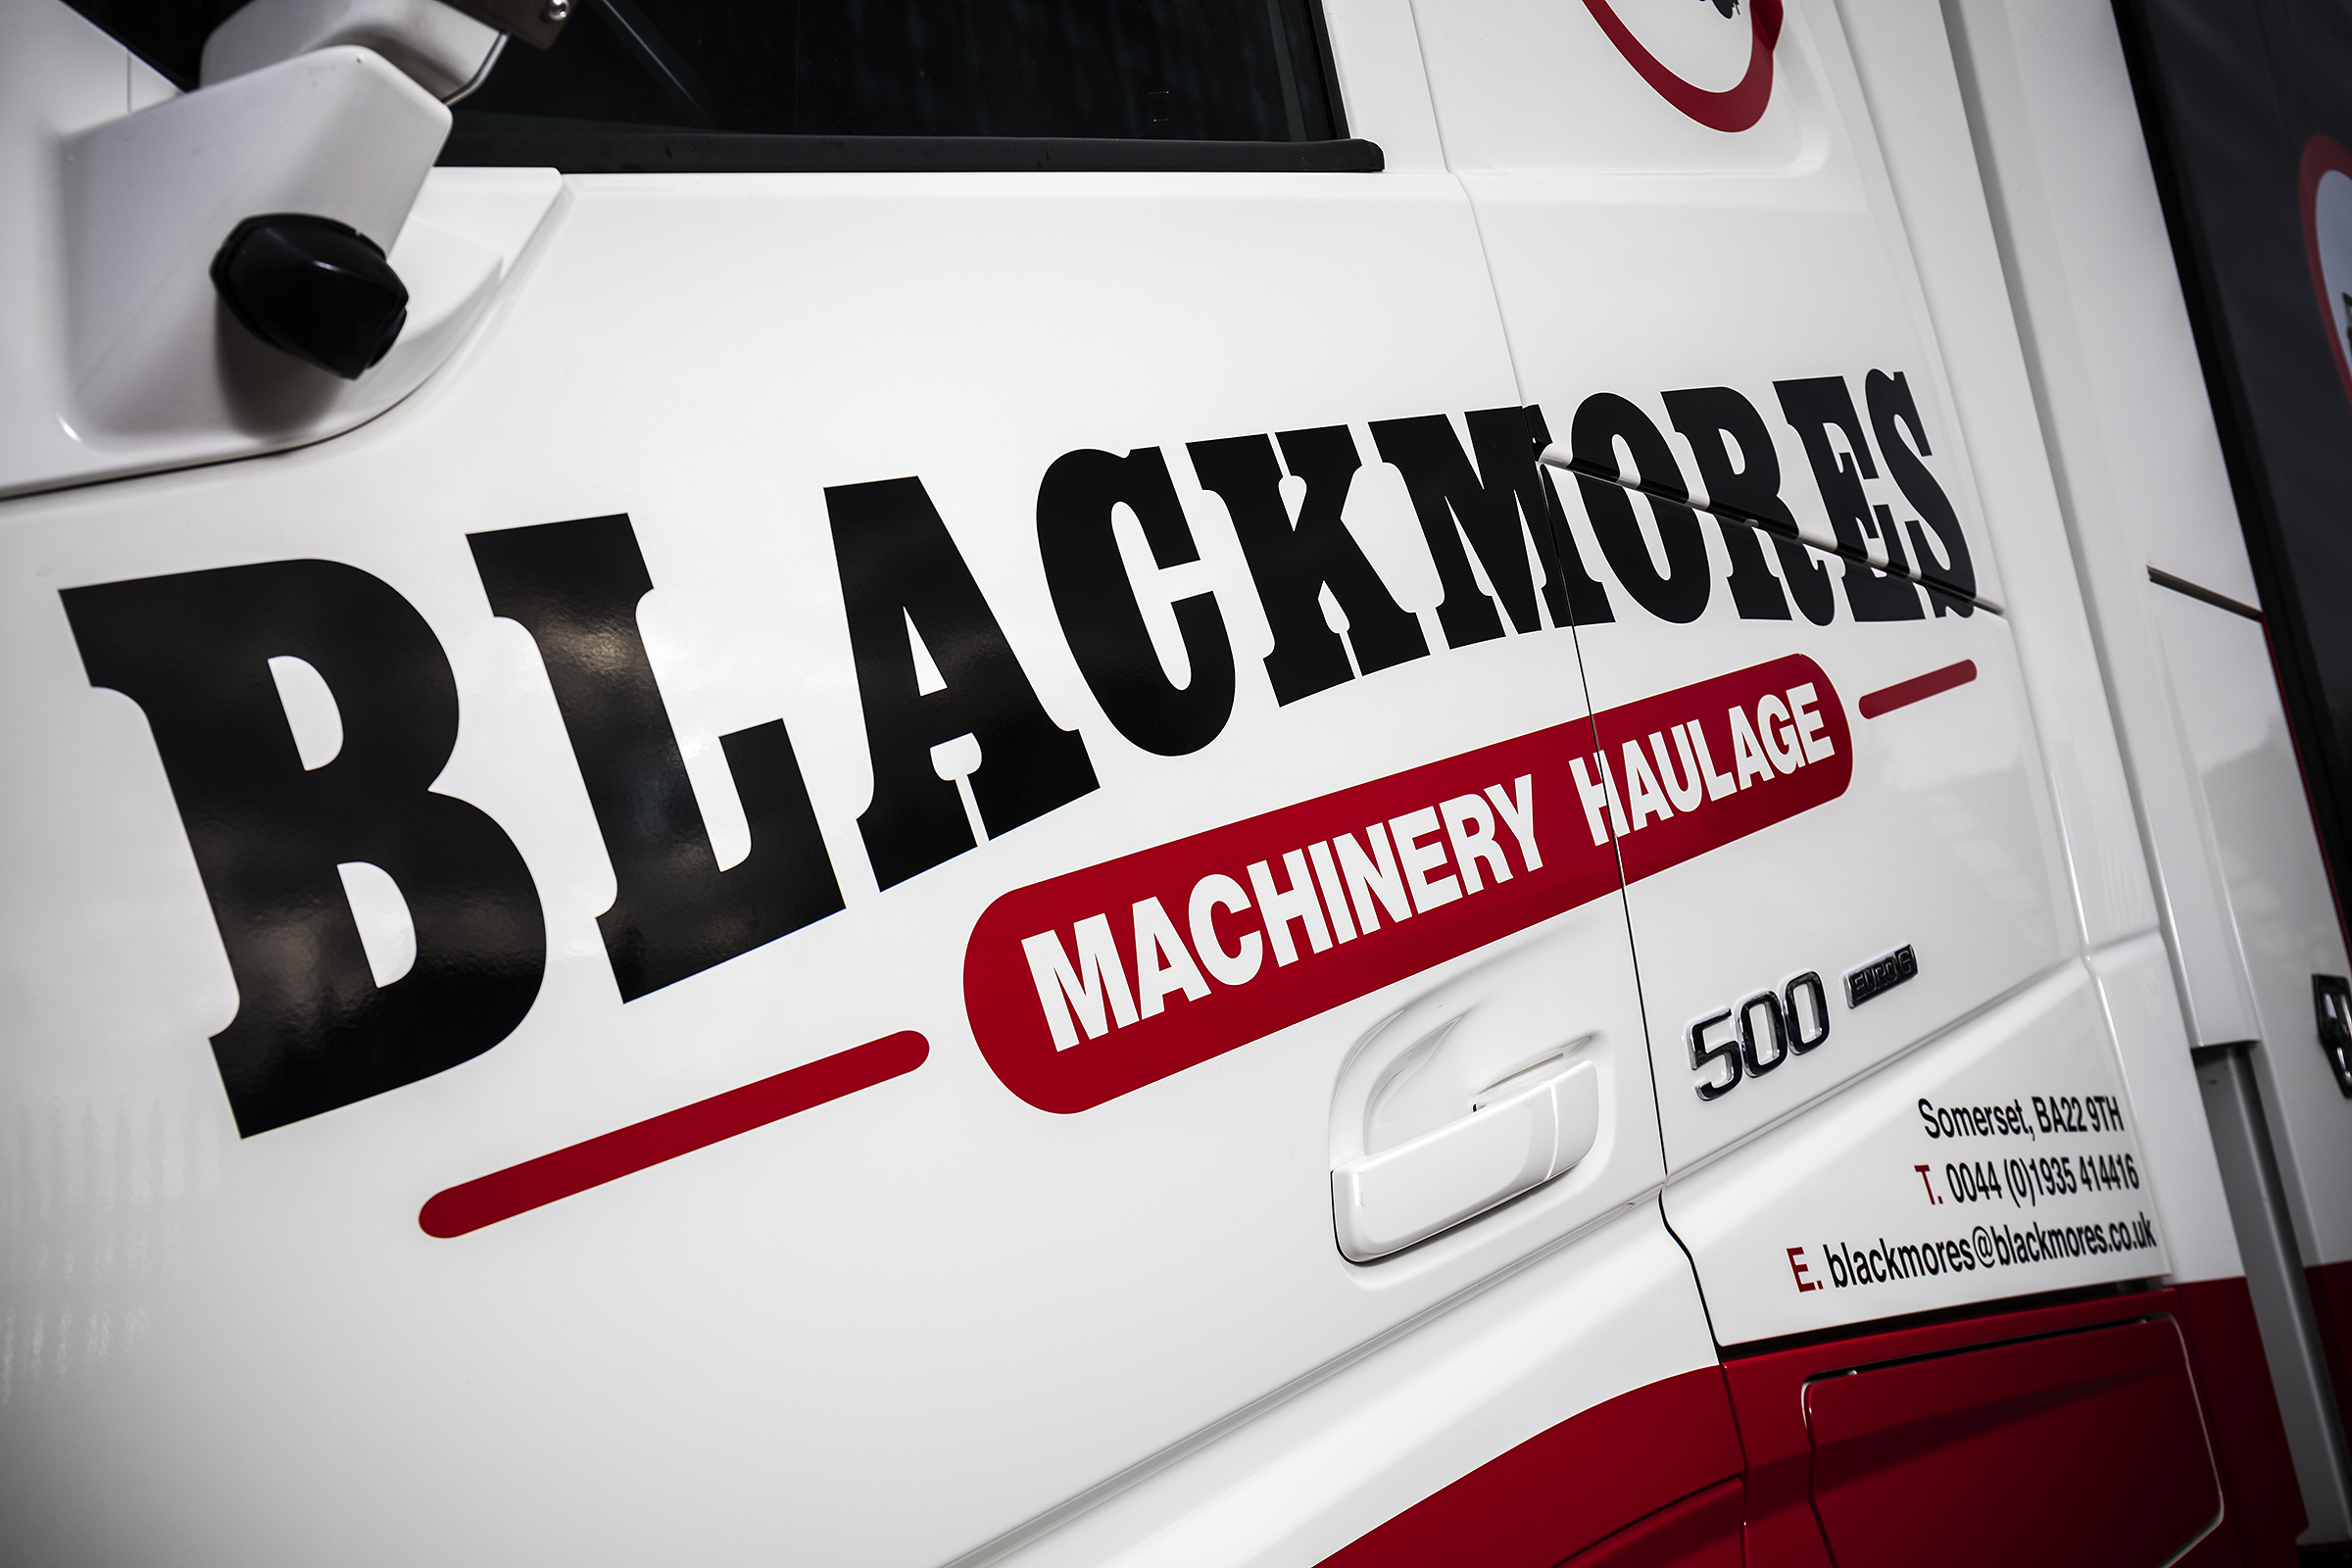 Blackmores Machinery Haulage Ltd